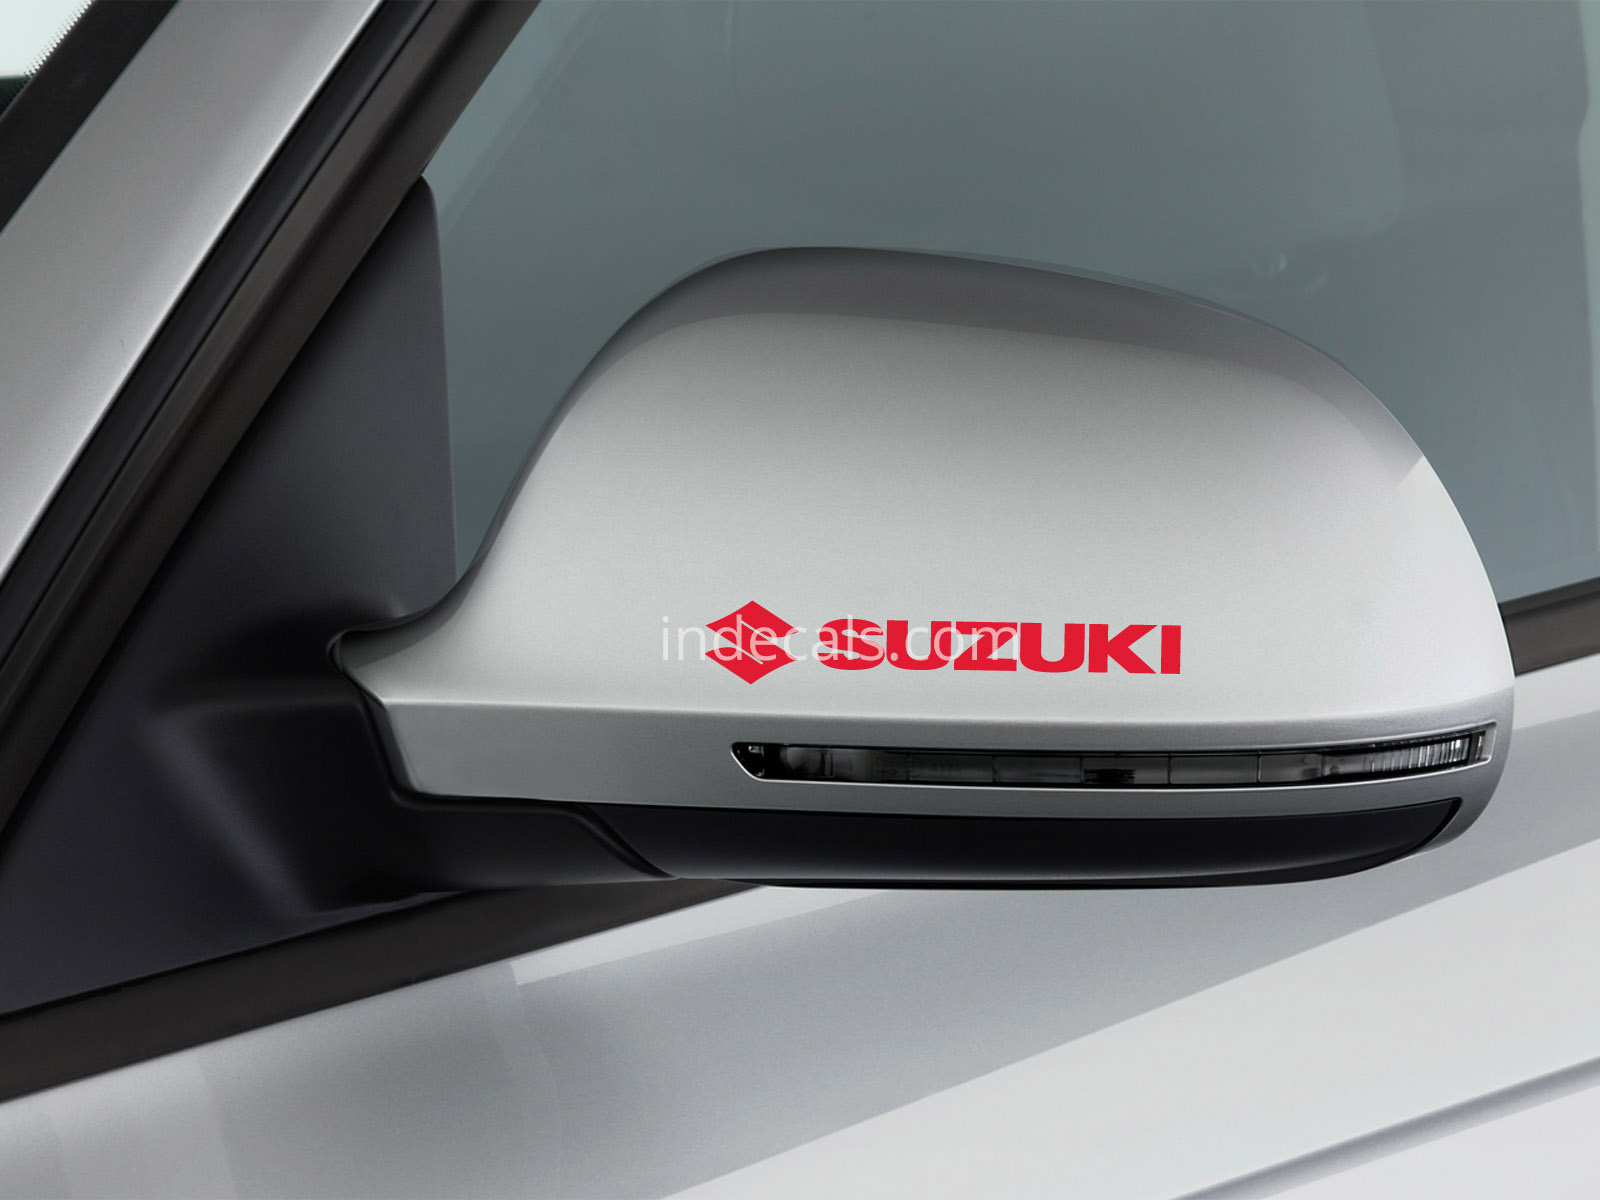 3 x Suzuki Stickers for Mirrors - Red